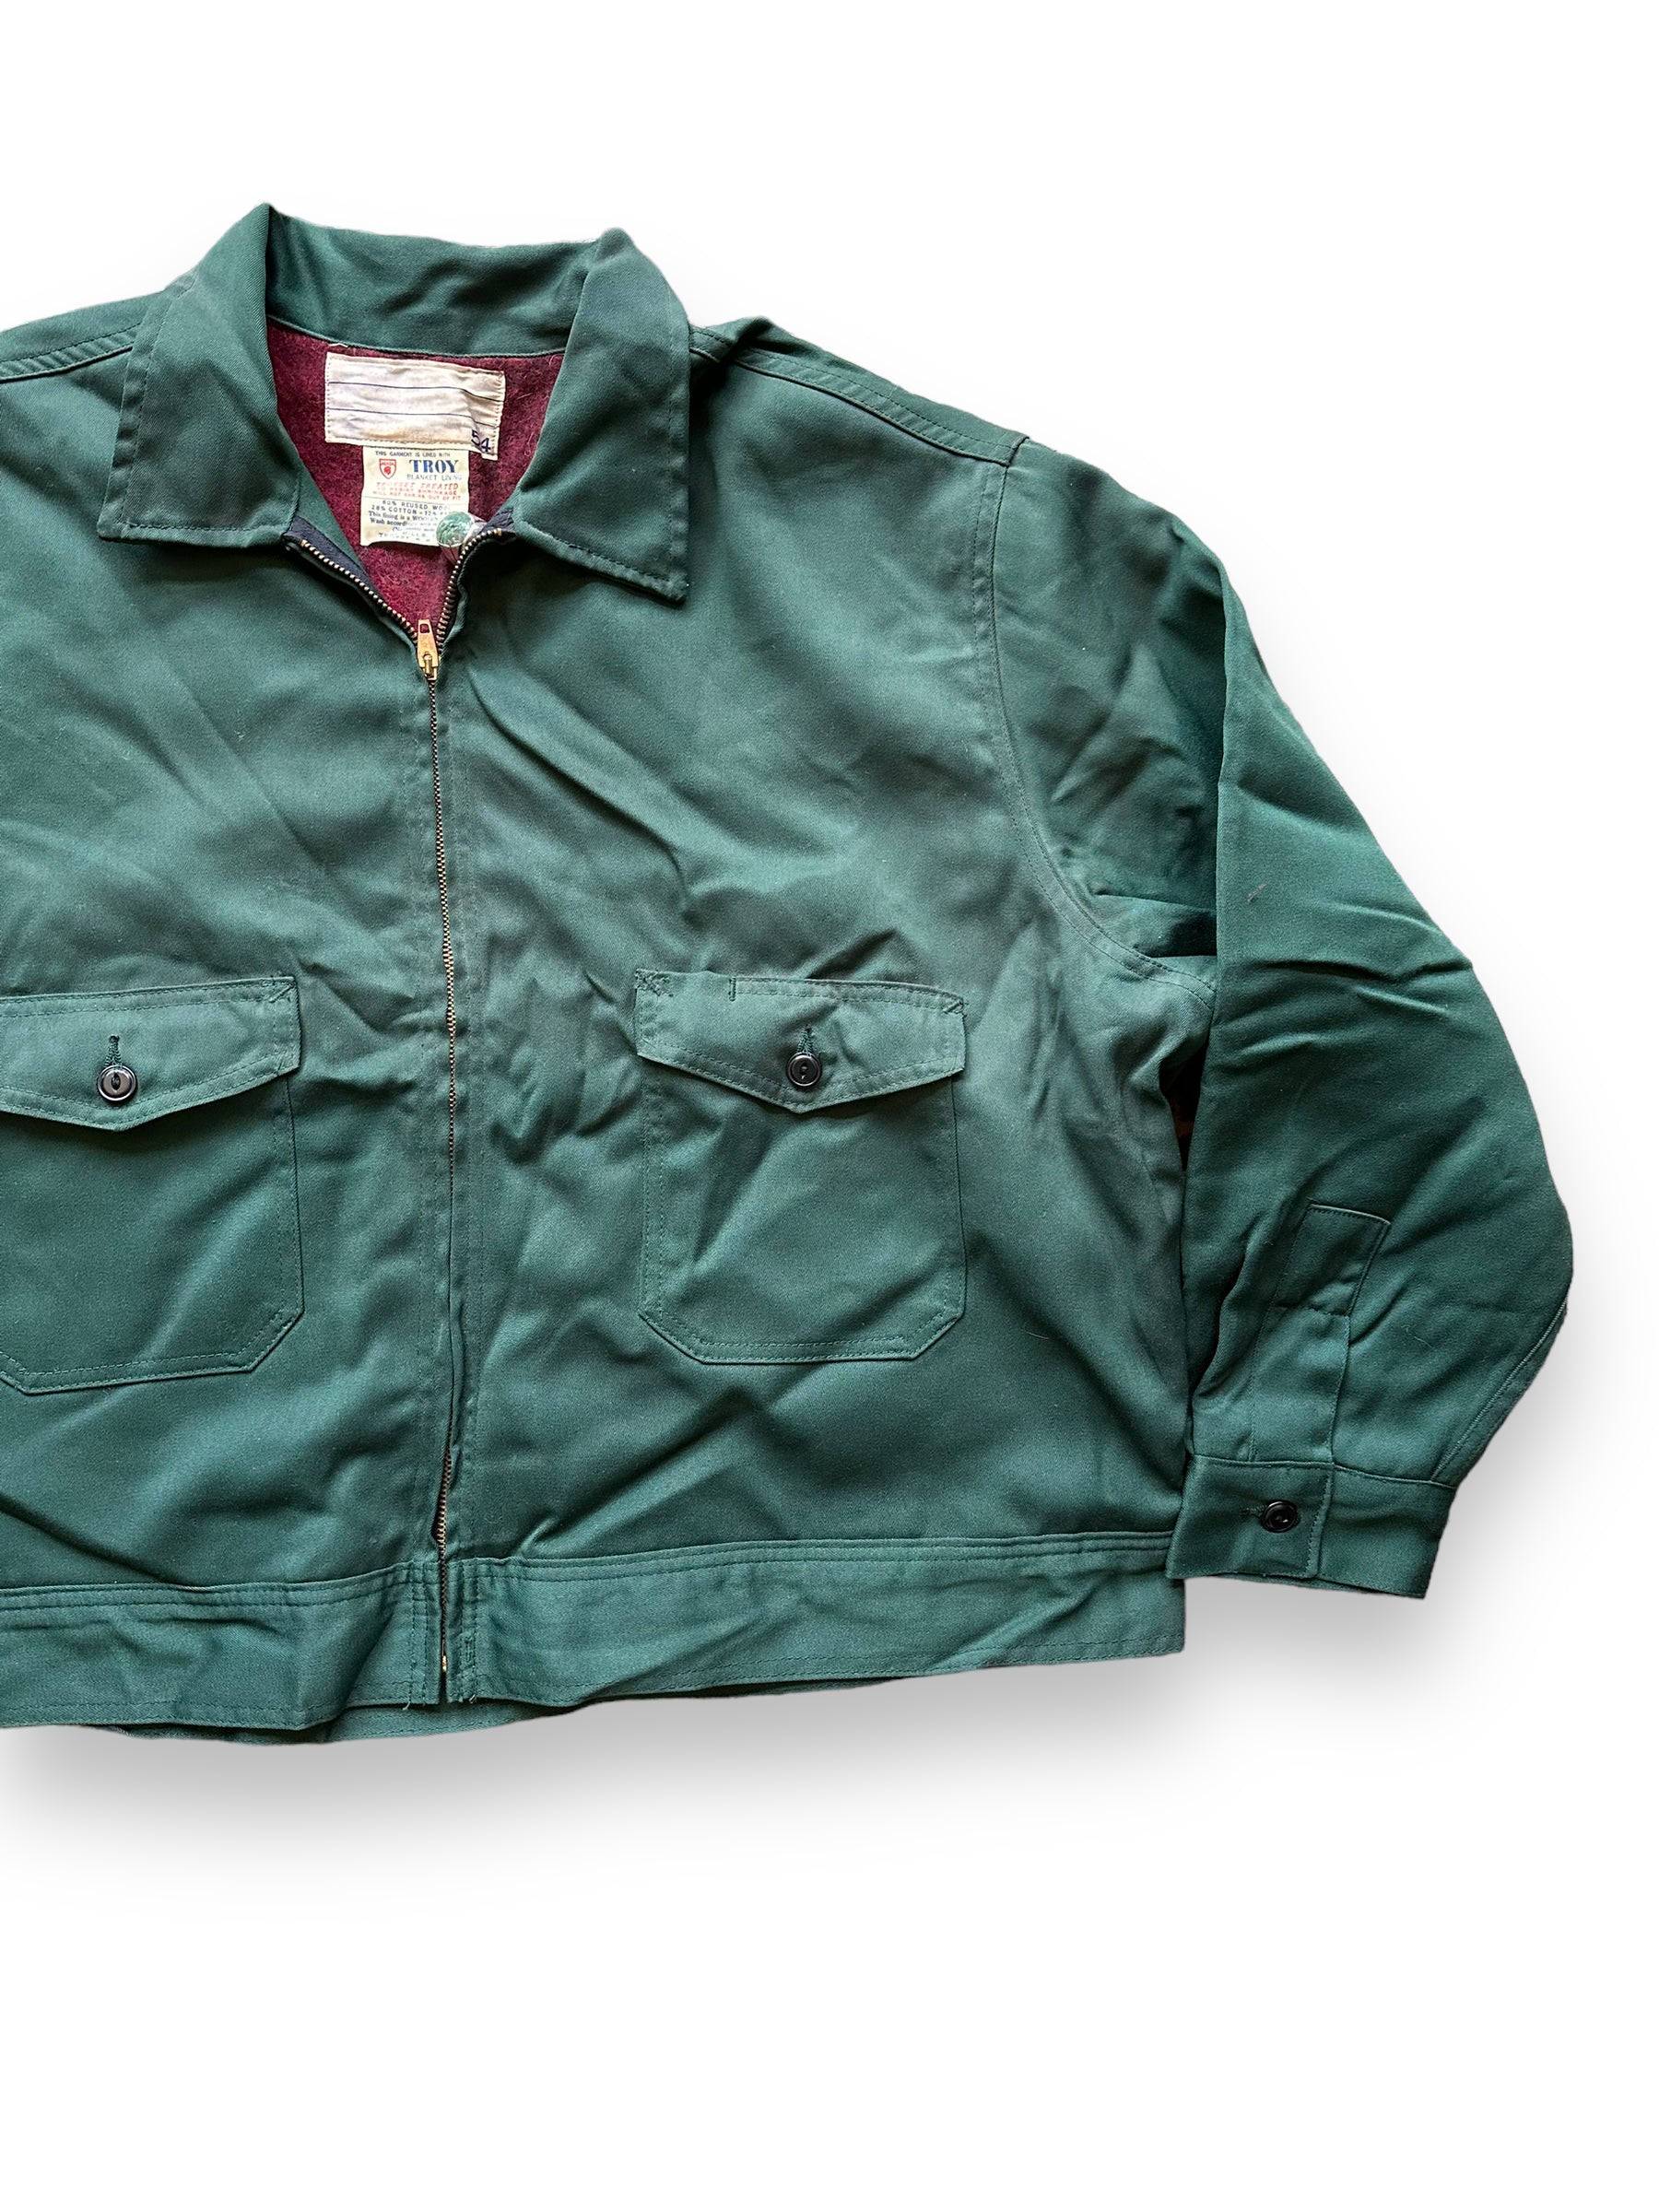 Front Left View of Vintage Green Troyset Blanket Lined Gas Station Jacket SZ 54 | Vintage Workwear Jacket Seattle | Seattle Vintage Clothing